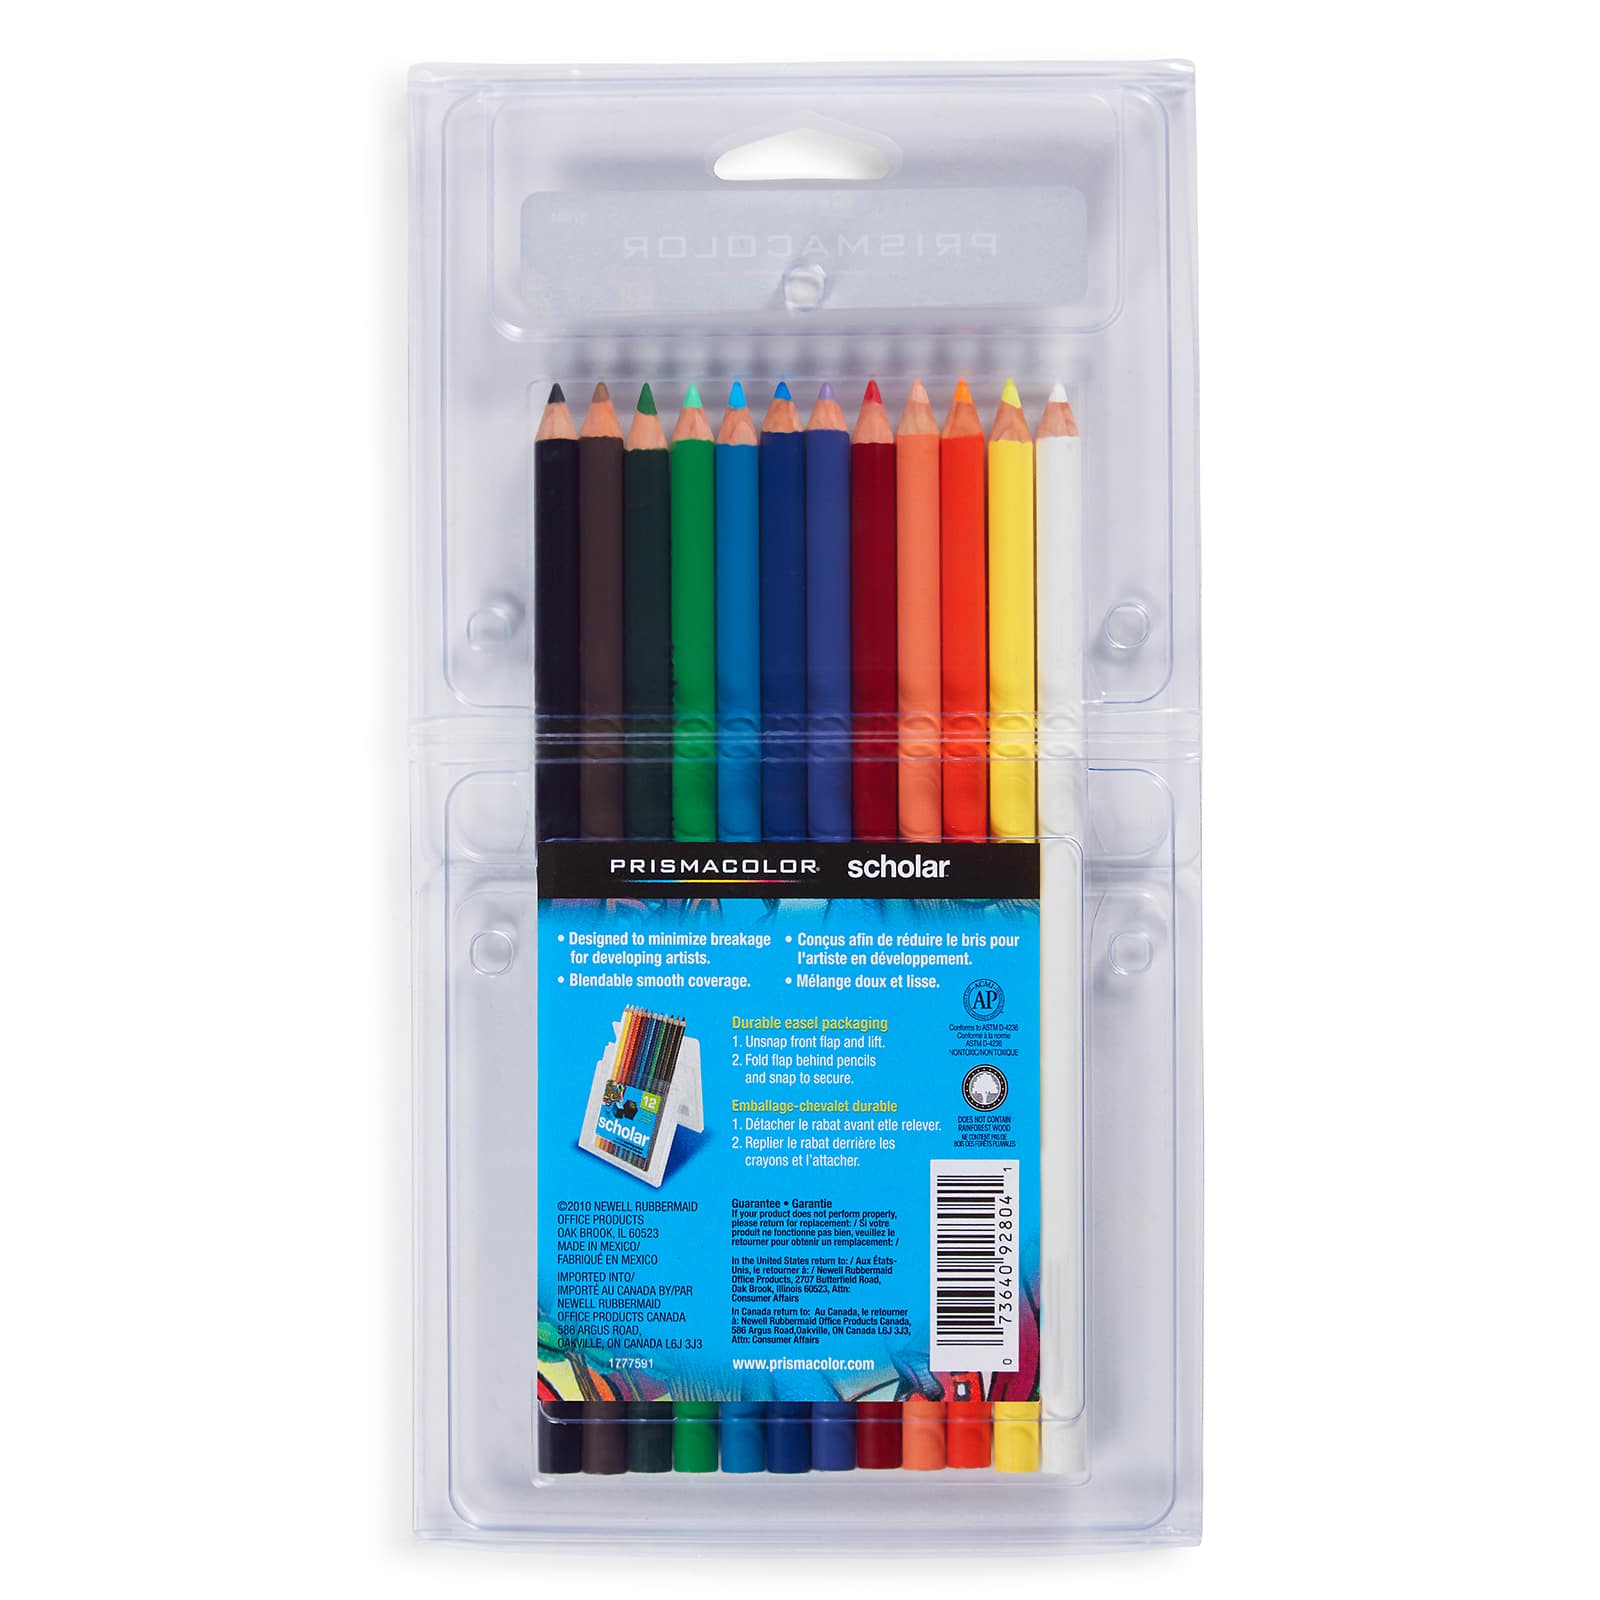 Prismacolor Colored Pencils, Set of 48 Pencils Prismacolor Scholar